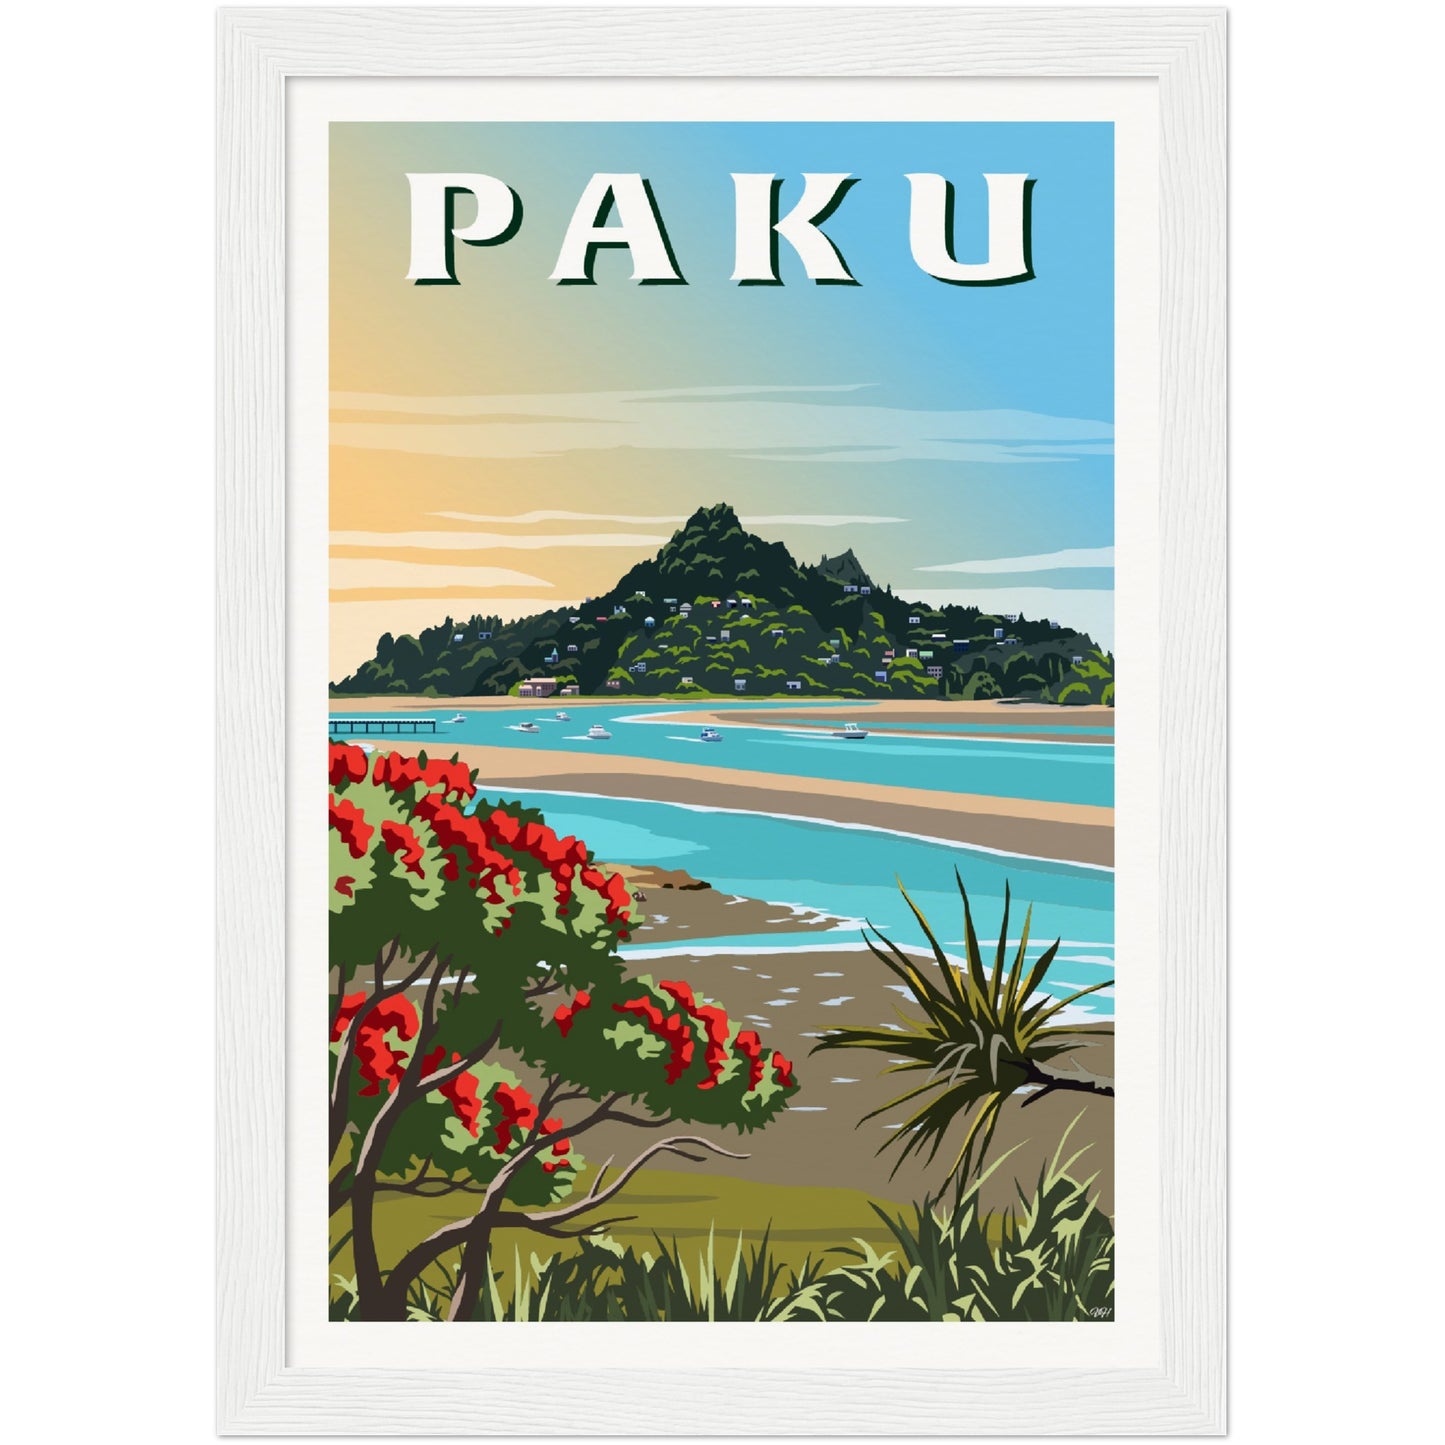 Mount Paku Travel Poster, Tairua, New Zealand